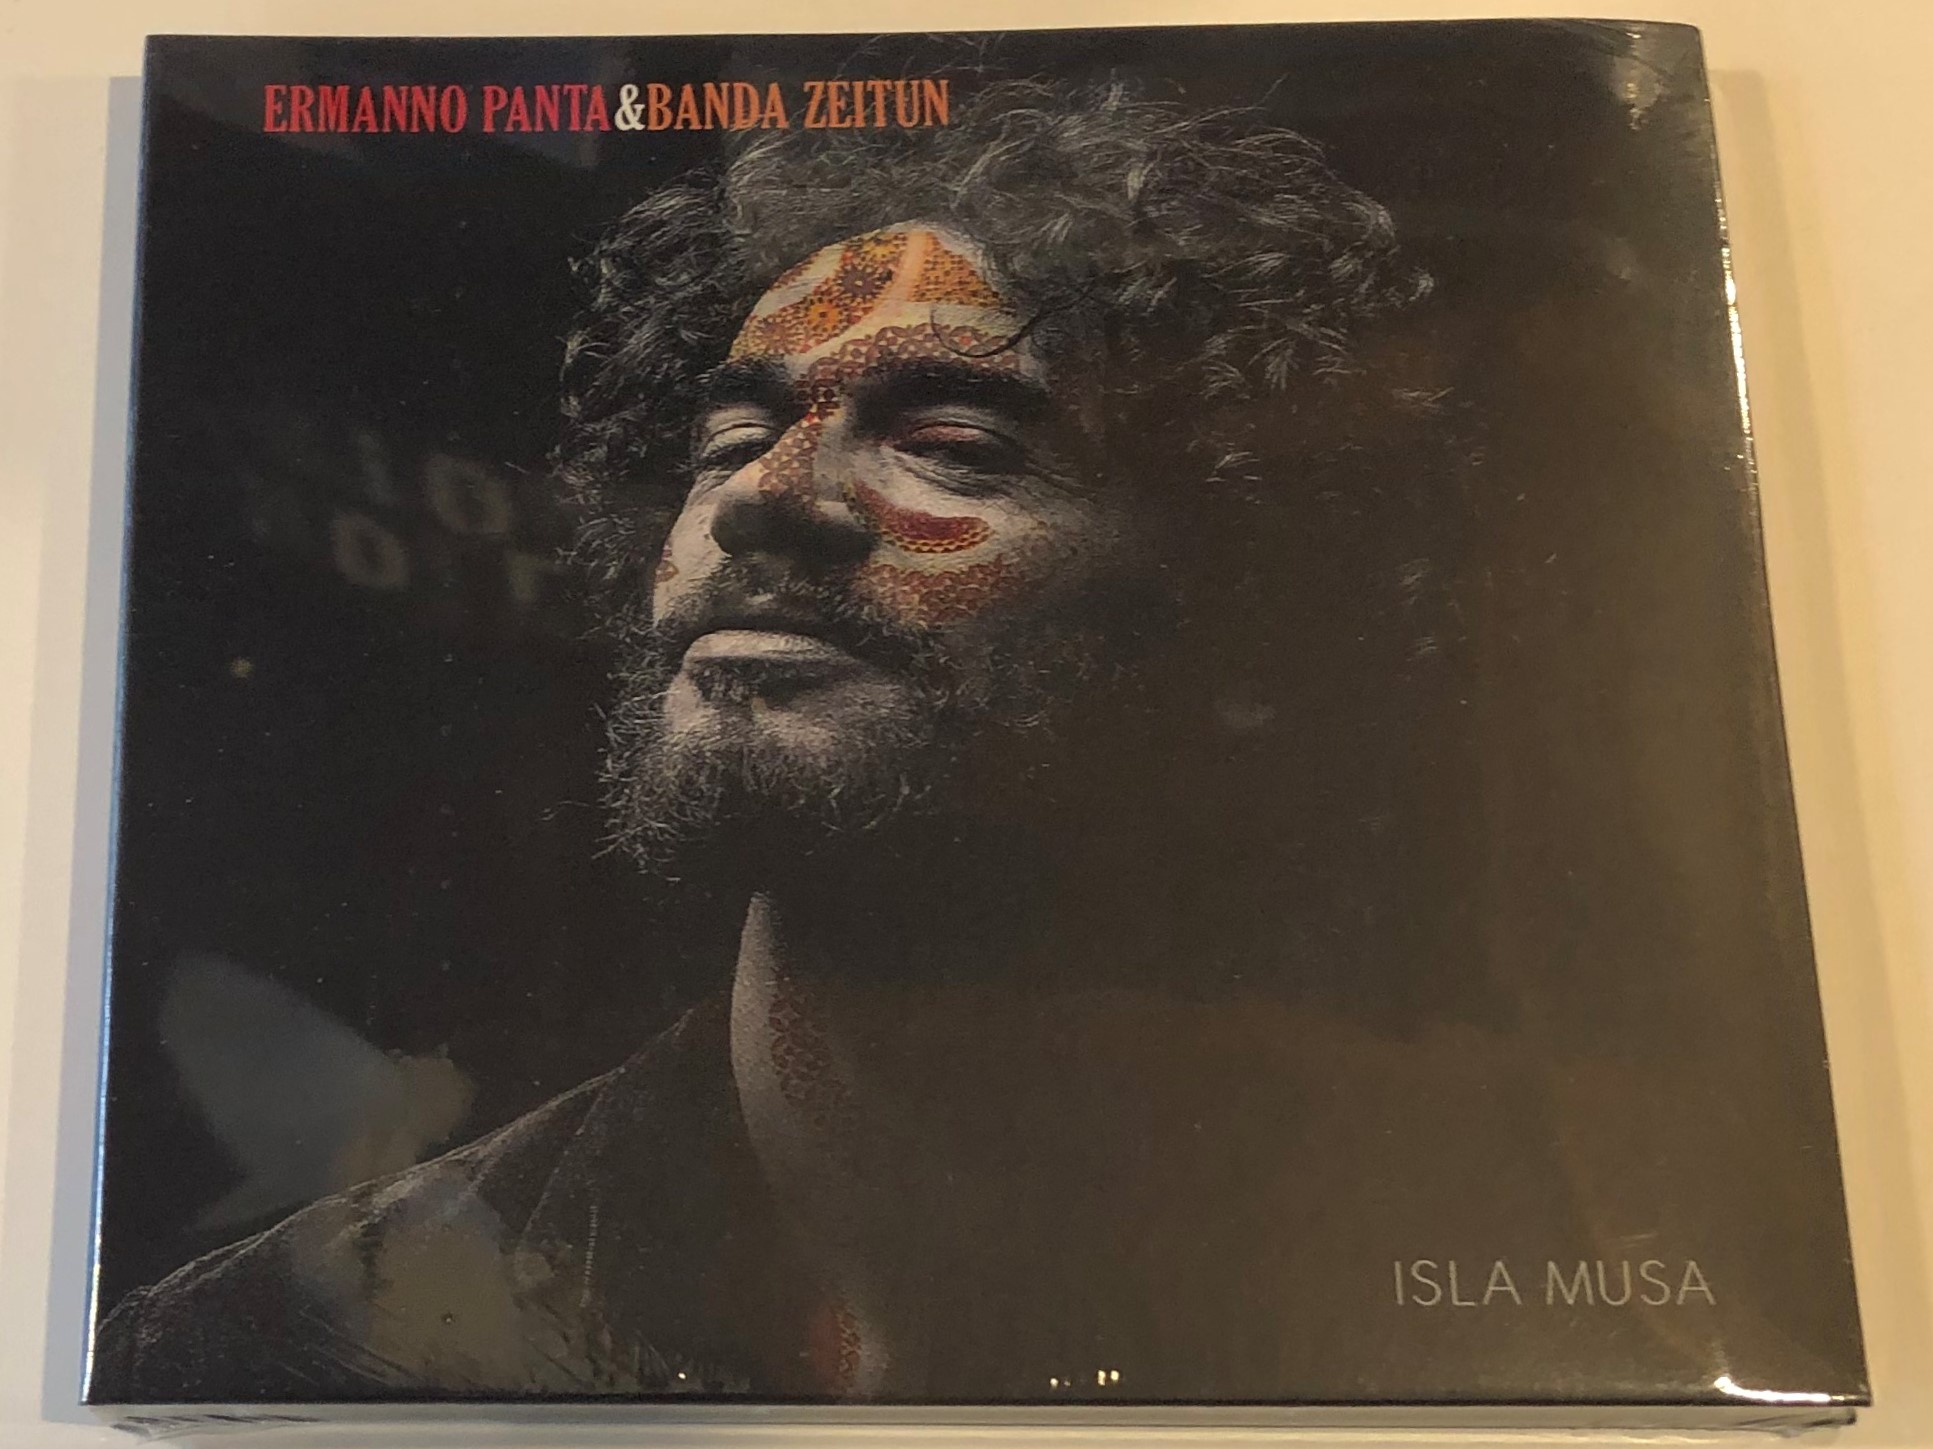 ermanno-panta-banda-zeitun-isla-musa-narrator-records-audio-cd-nrr170-5998733101703-.jpg